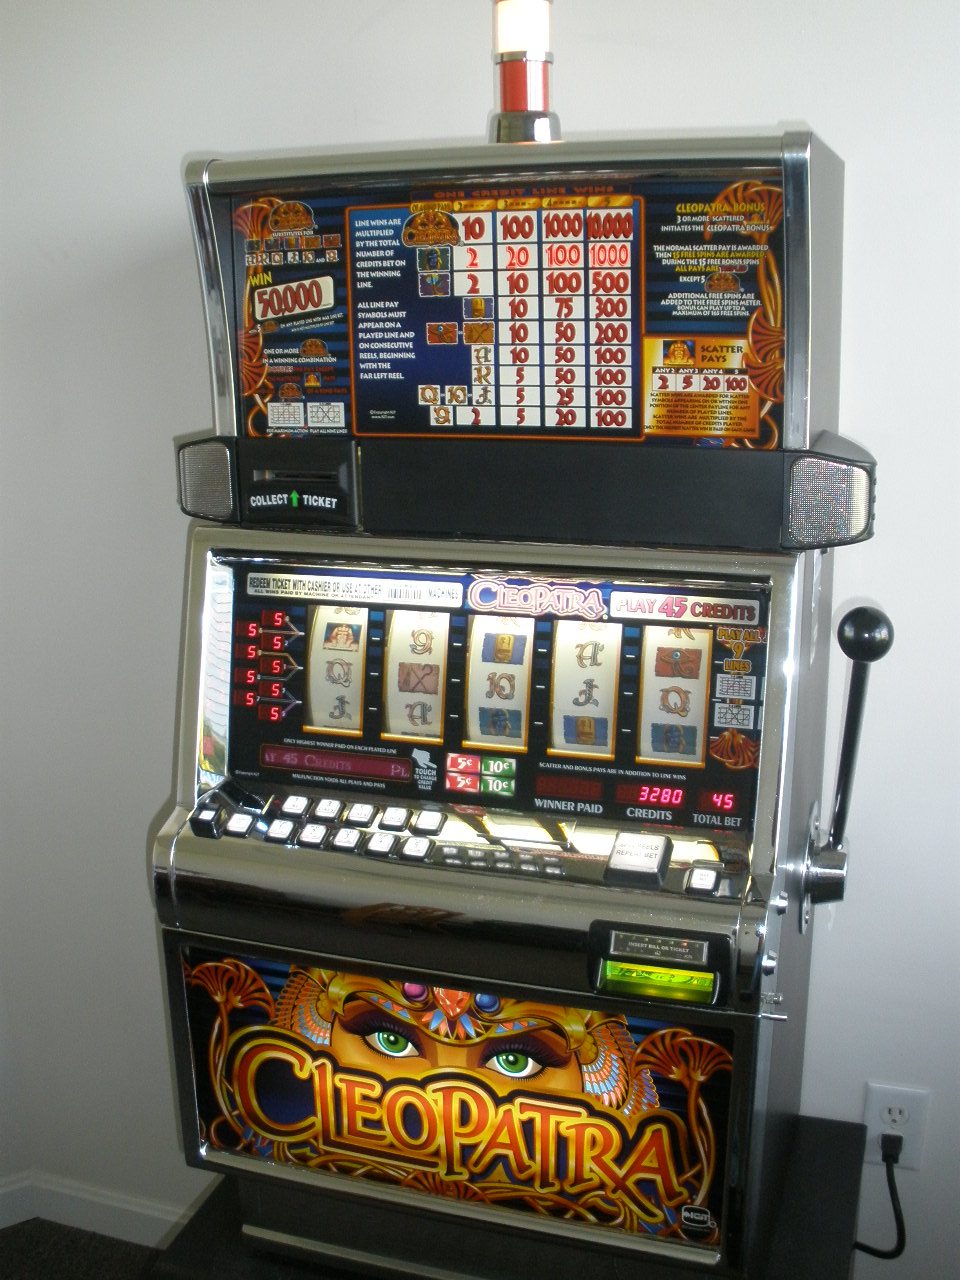 slot machine cleopatra free